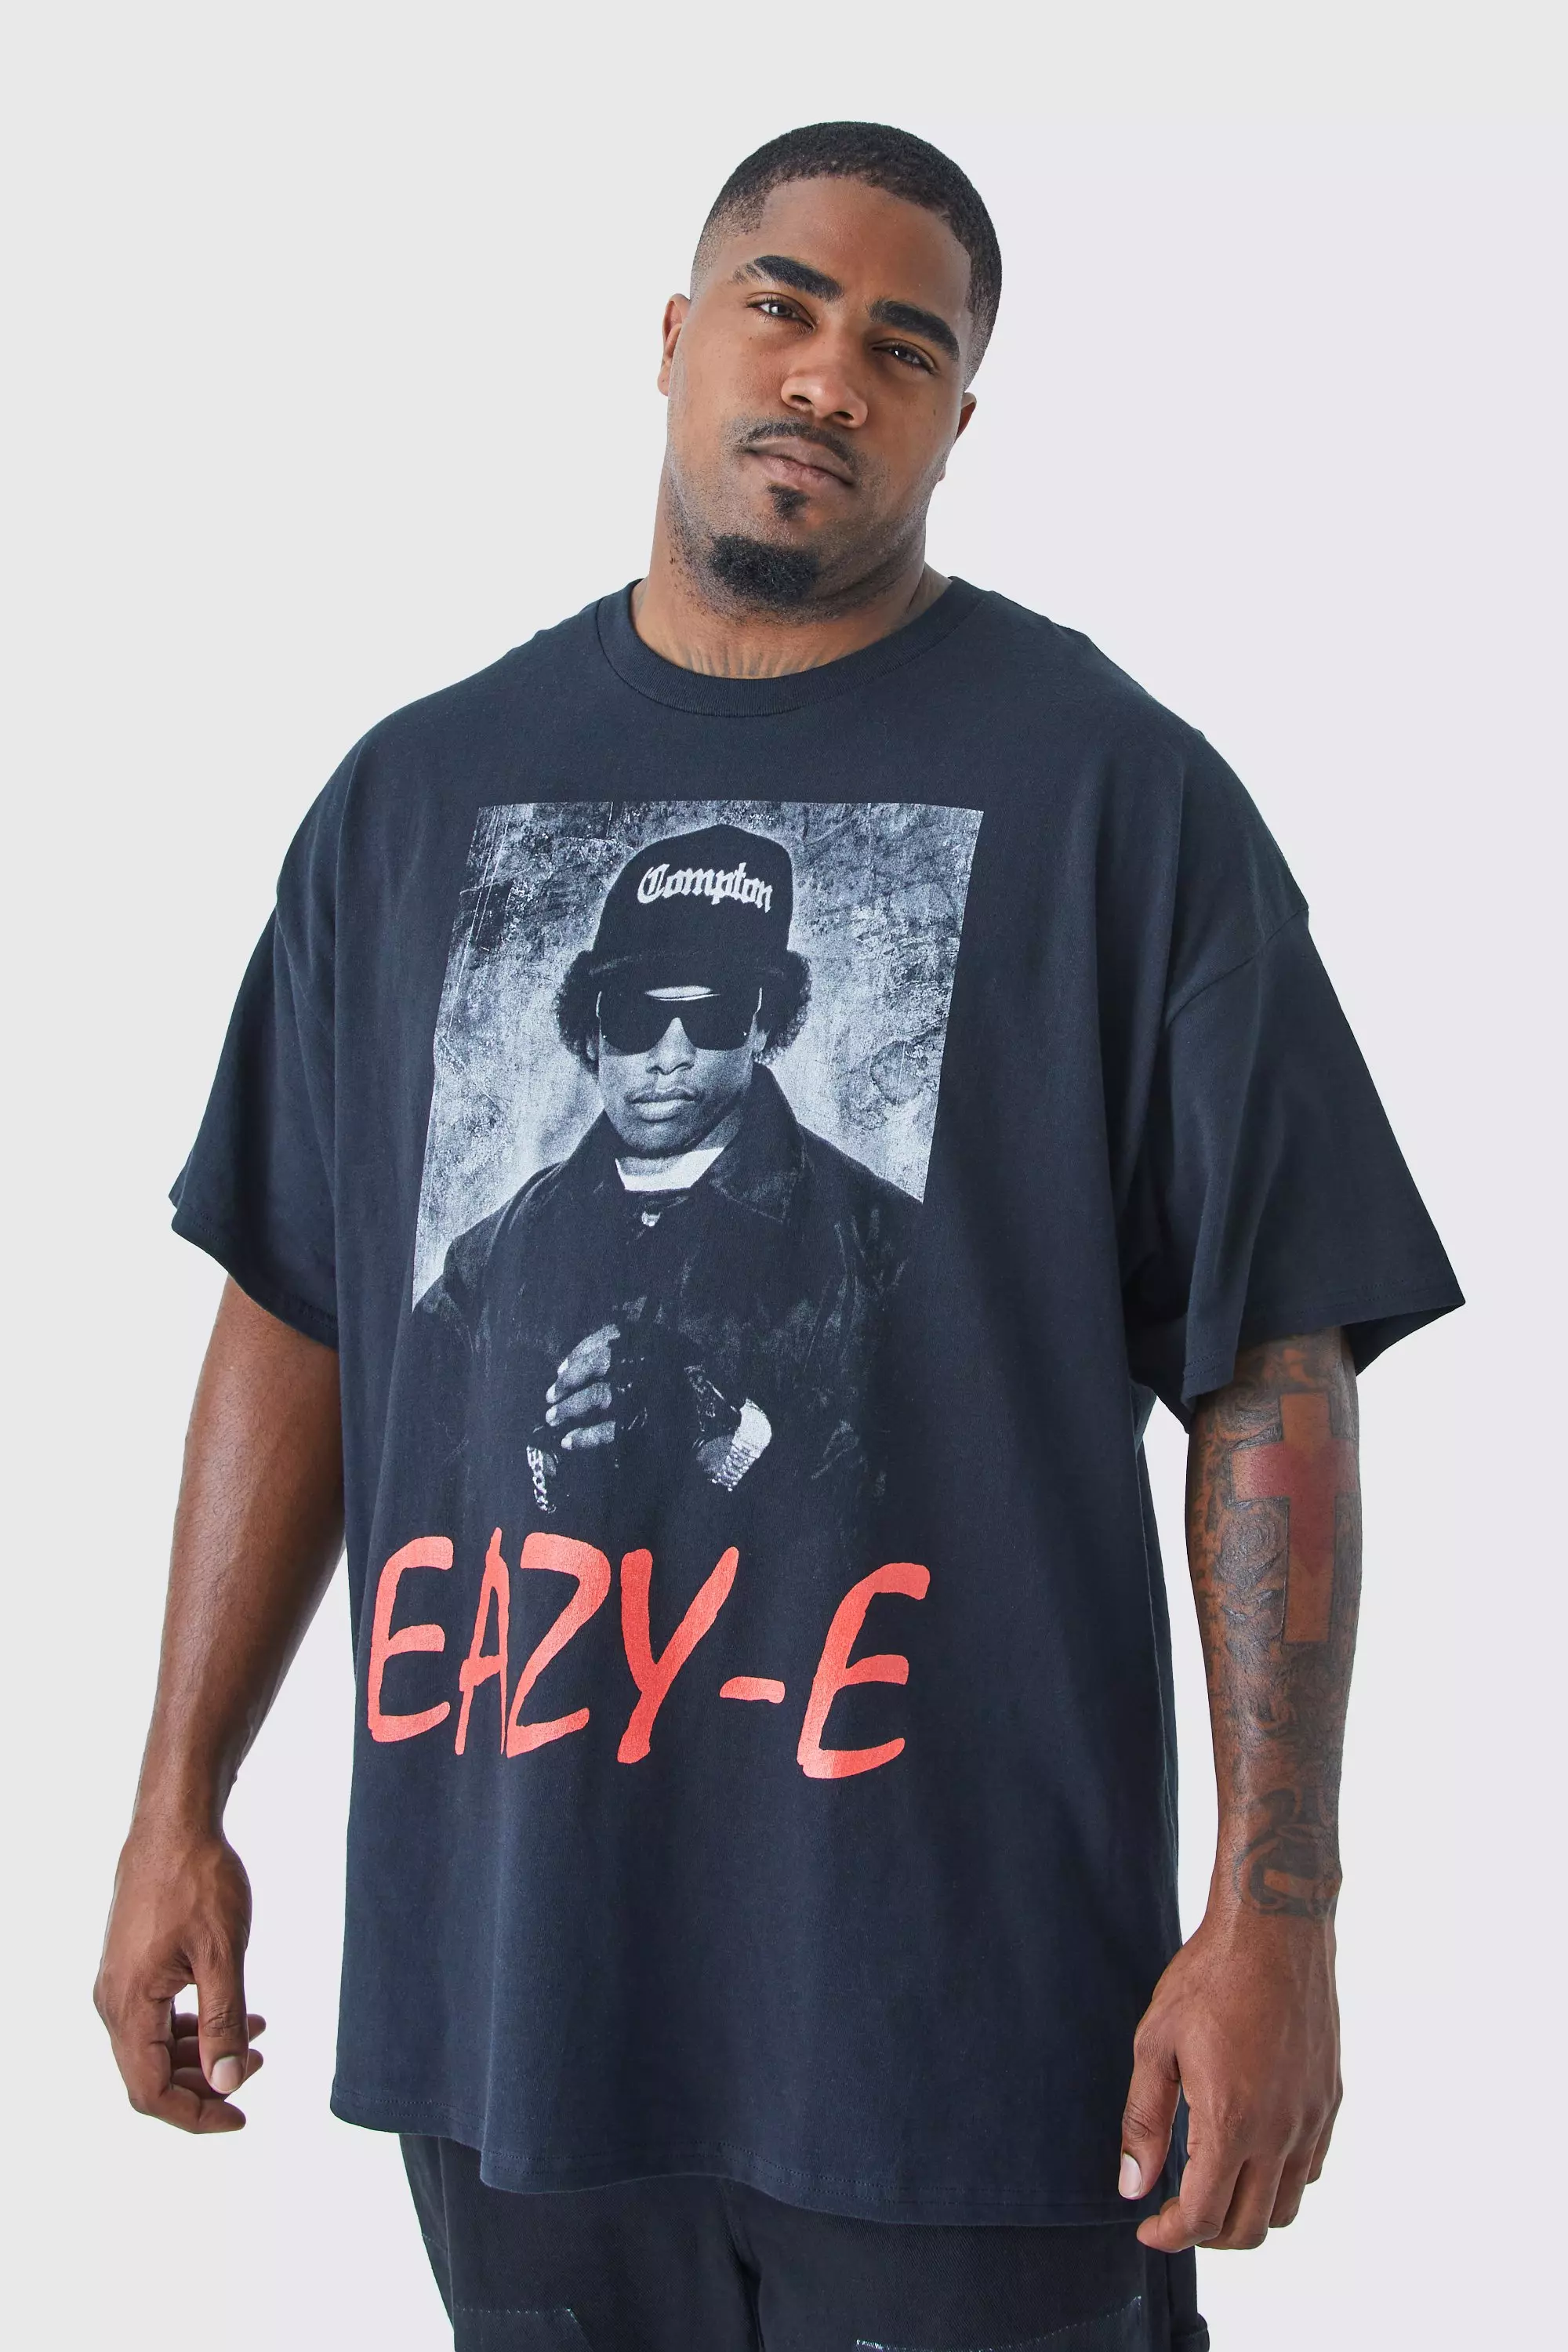 Plus Size Eazy E Chest Print License T-shirt Black